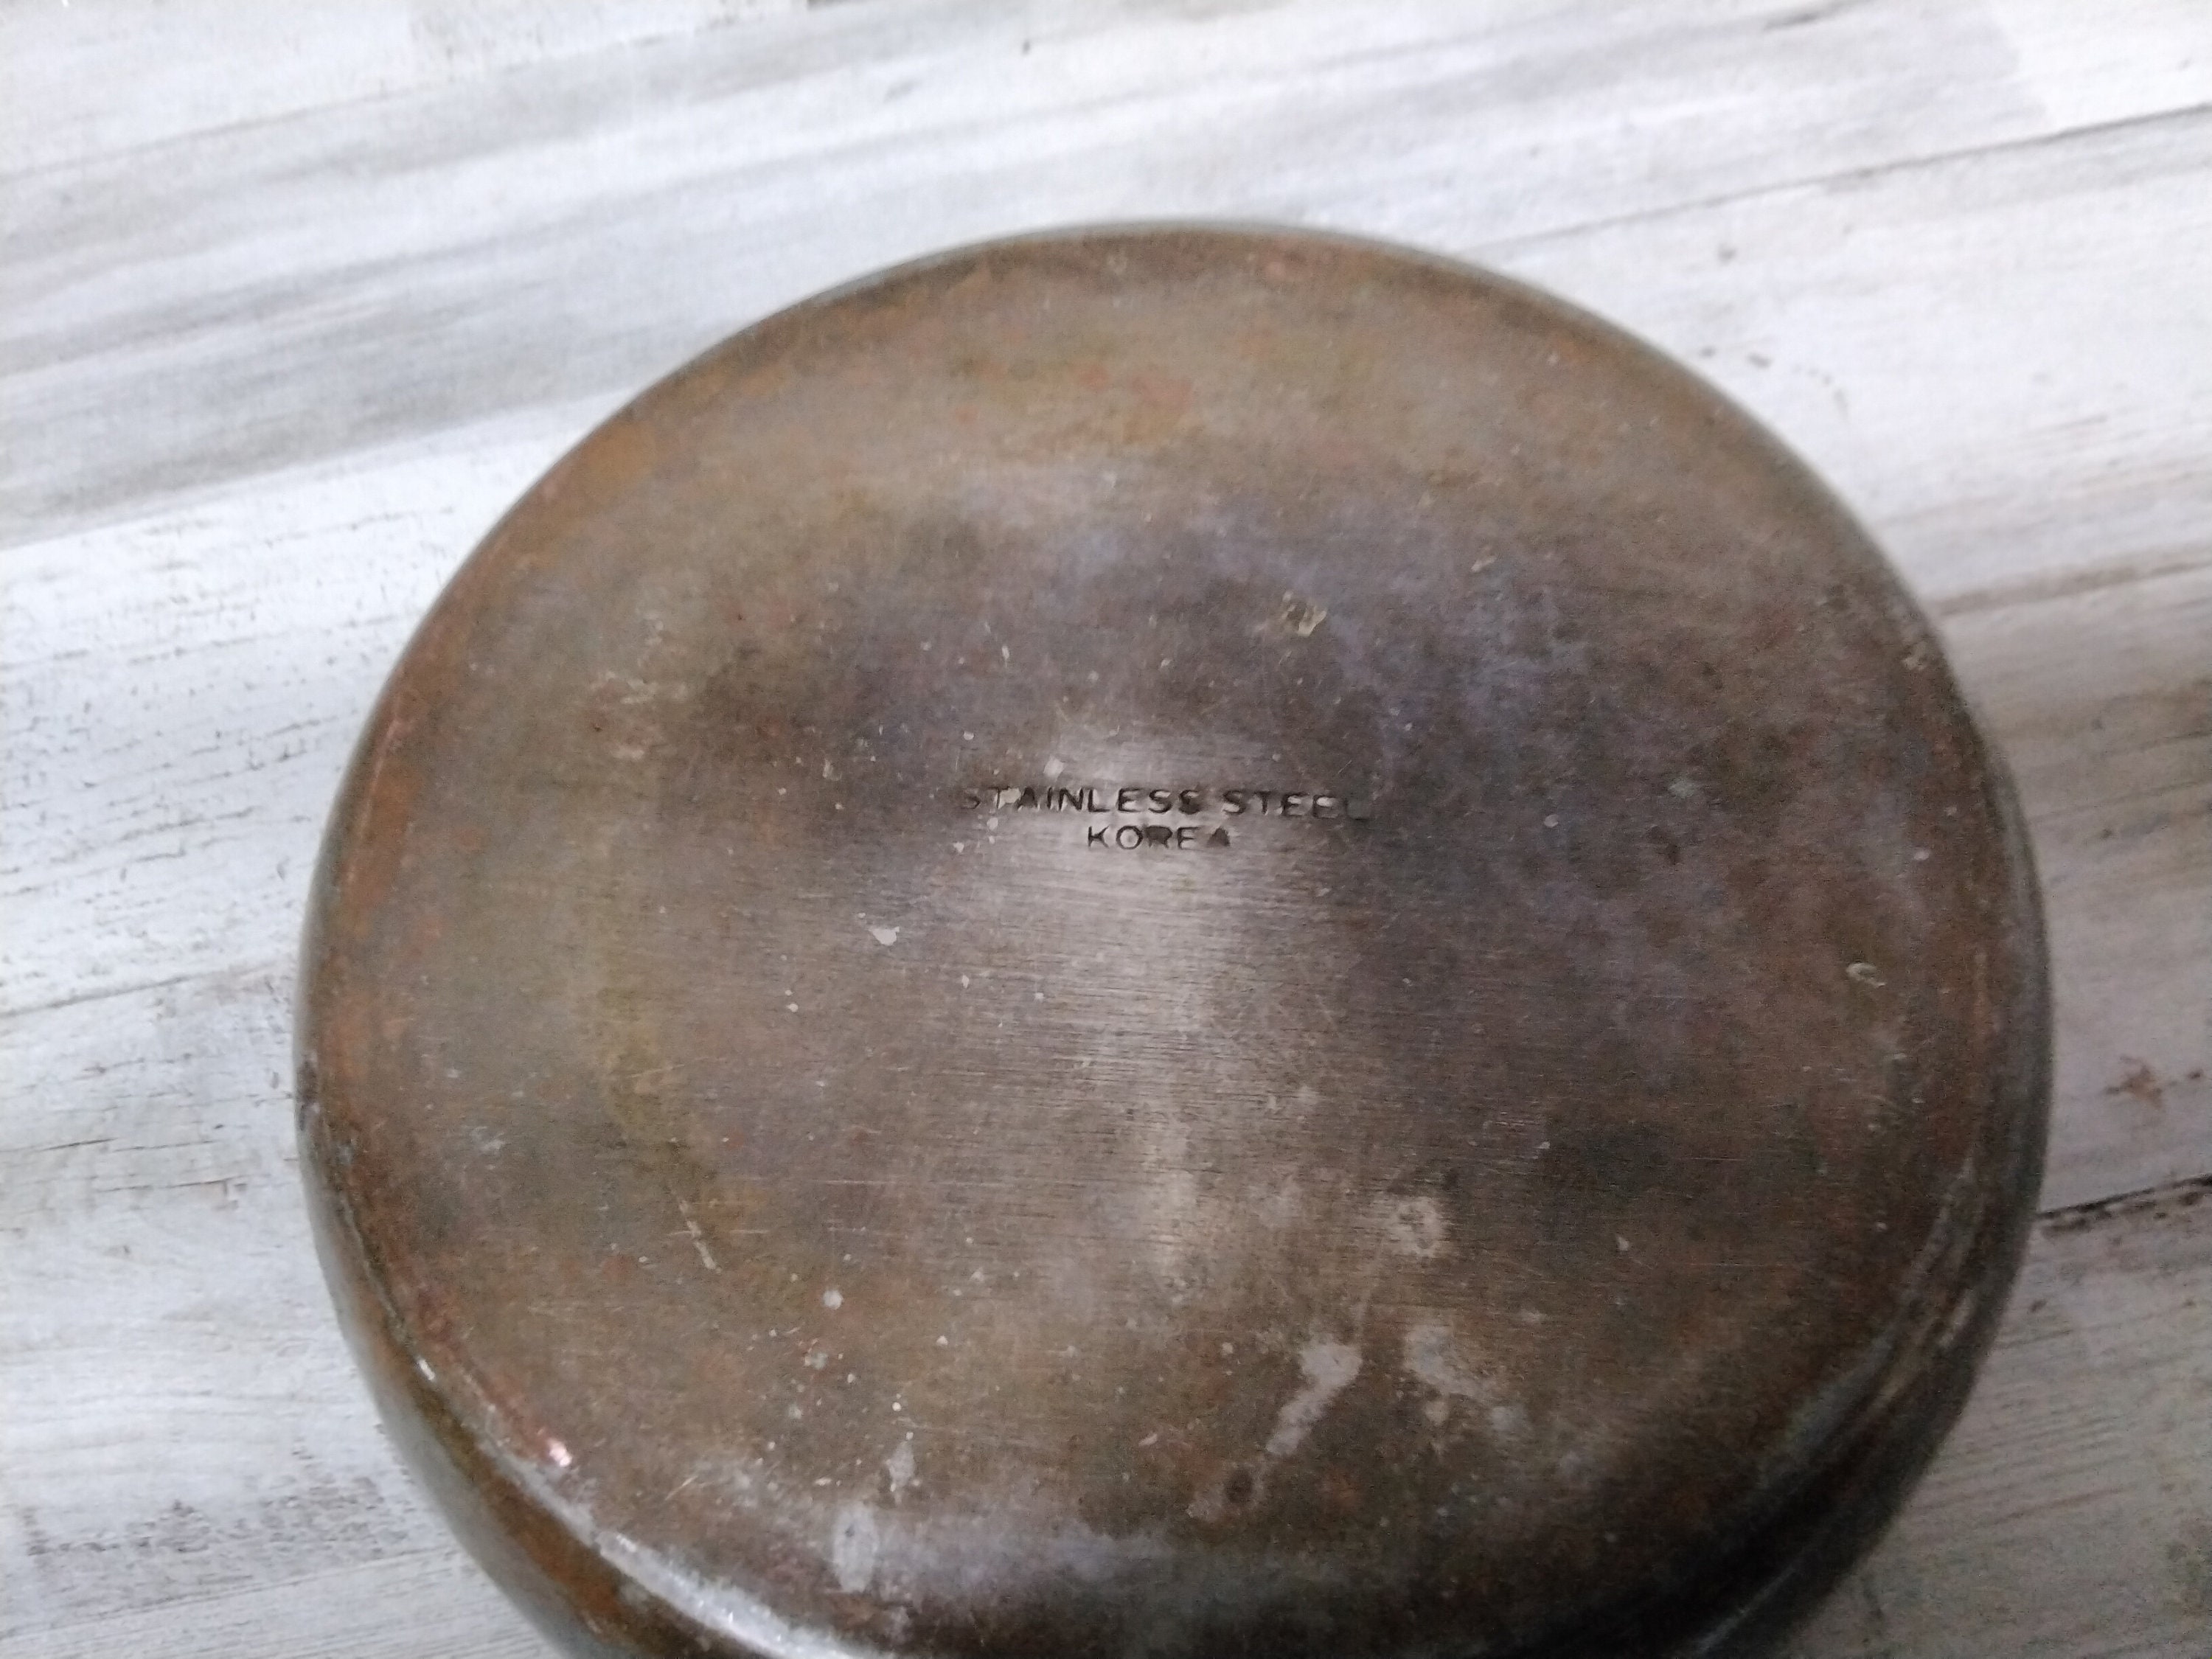 Vintage Small Stainless Steel Saucepan Made in Korea Korea